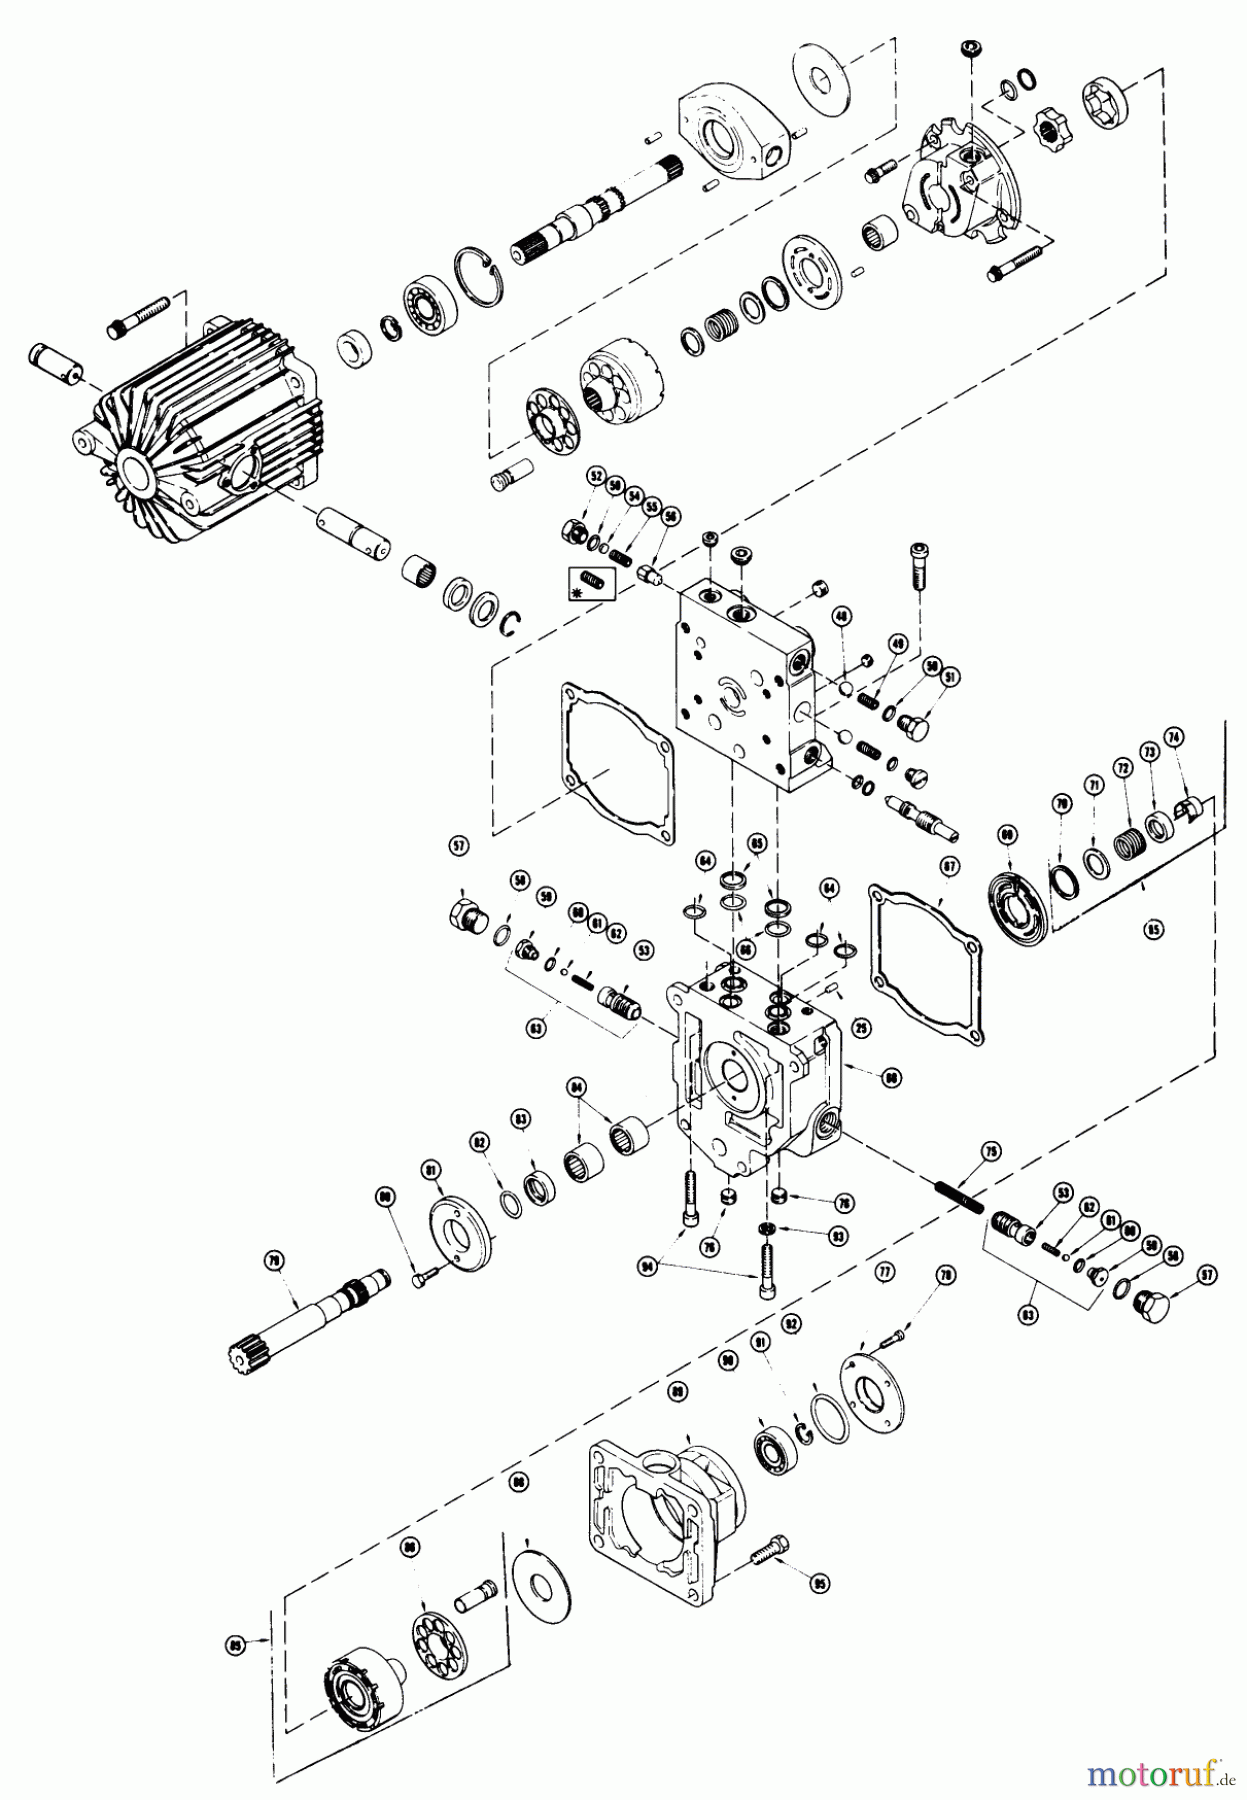  Toro Neu Mowers, Lawn & Garden Tractor Seite 1 71-16KS02 (C-160) - Toro C-160 Automatic Tractor, 1977 HYDROSTATIC TRANSMISSION #3